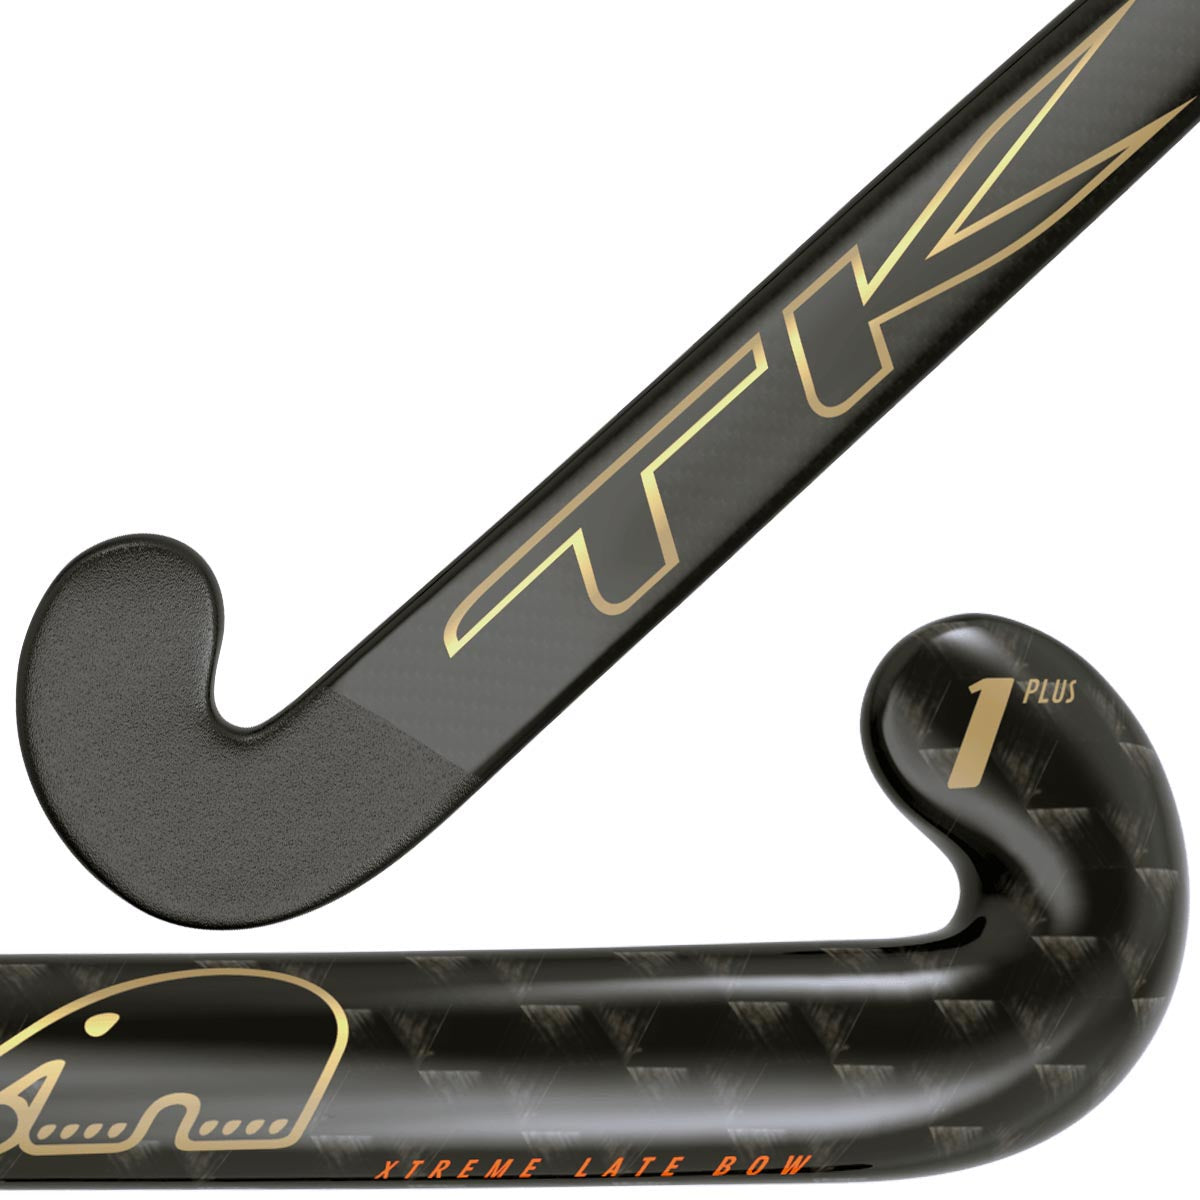 Kalmte uitsterven ingewikkeld TK 1 Plus Xtreme Late Bow Field Hockey Stick – Hit the Net Sports